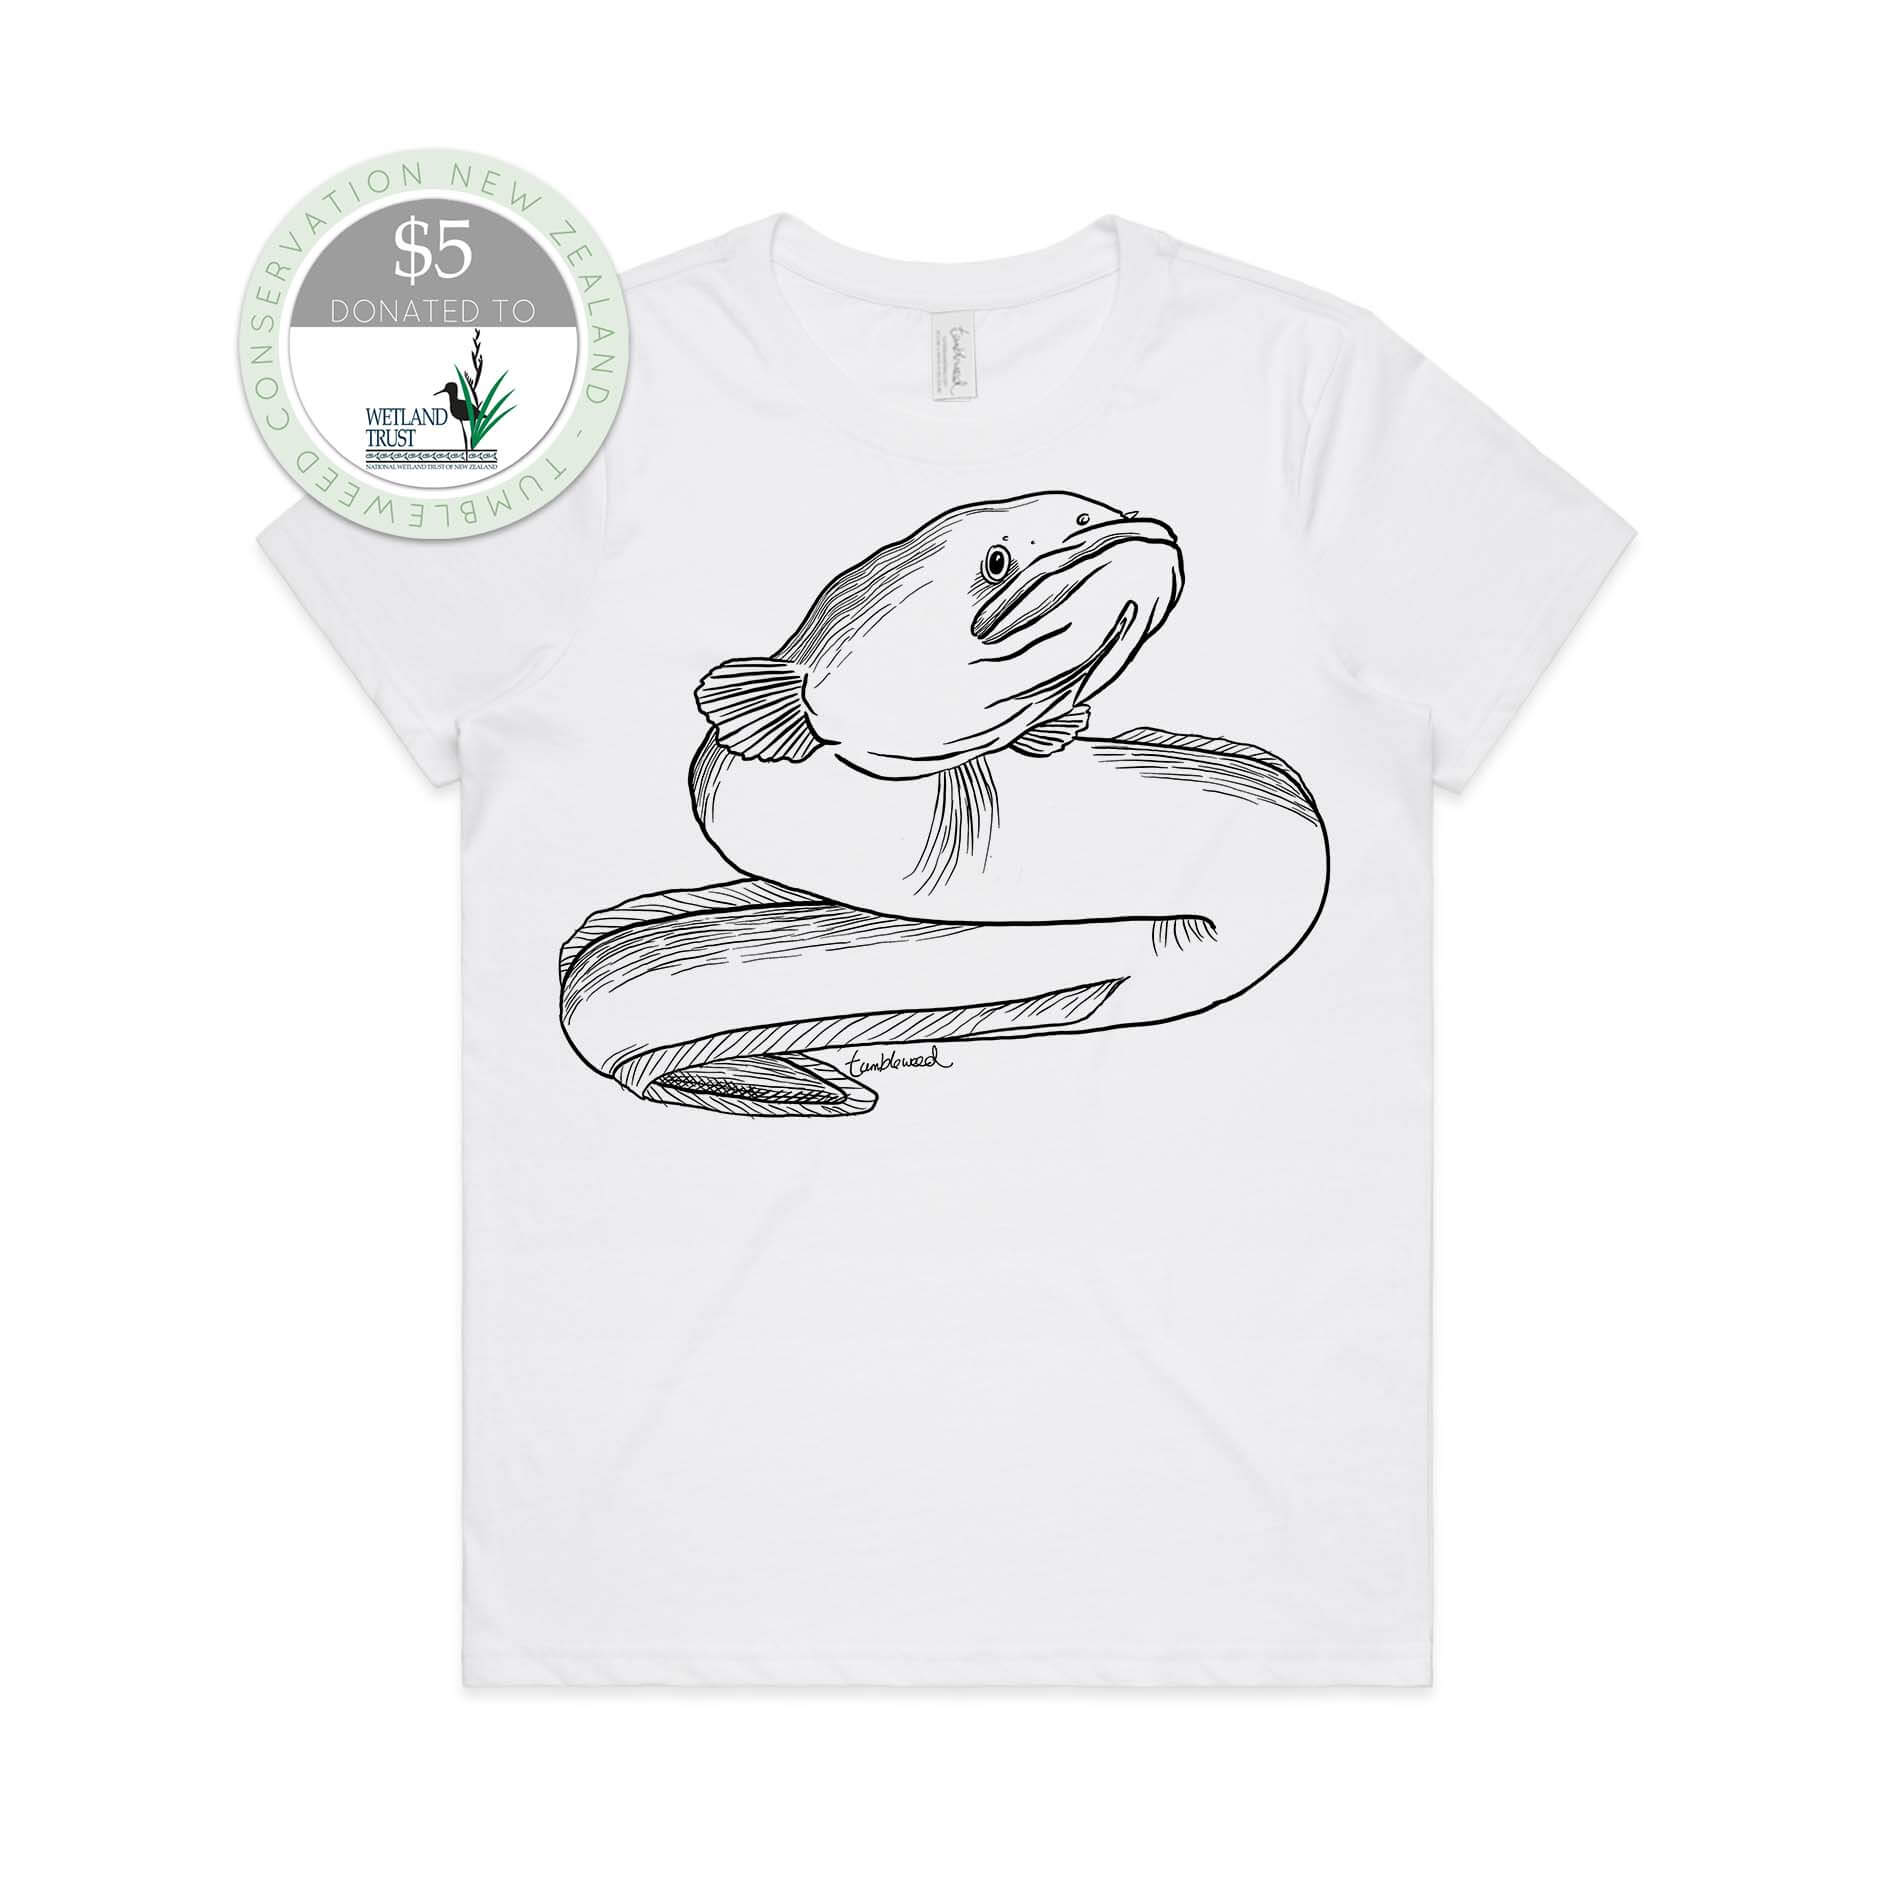 White, female t-shirt featuring a screen printed Longfin Eel/Tuna design.